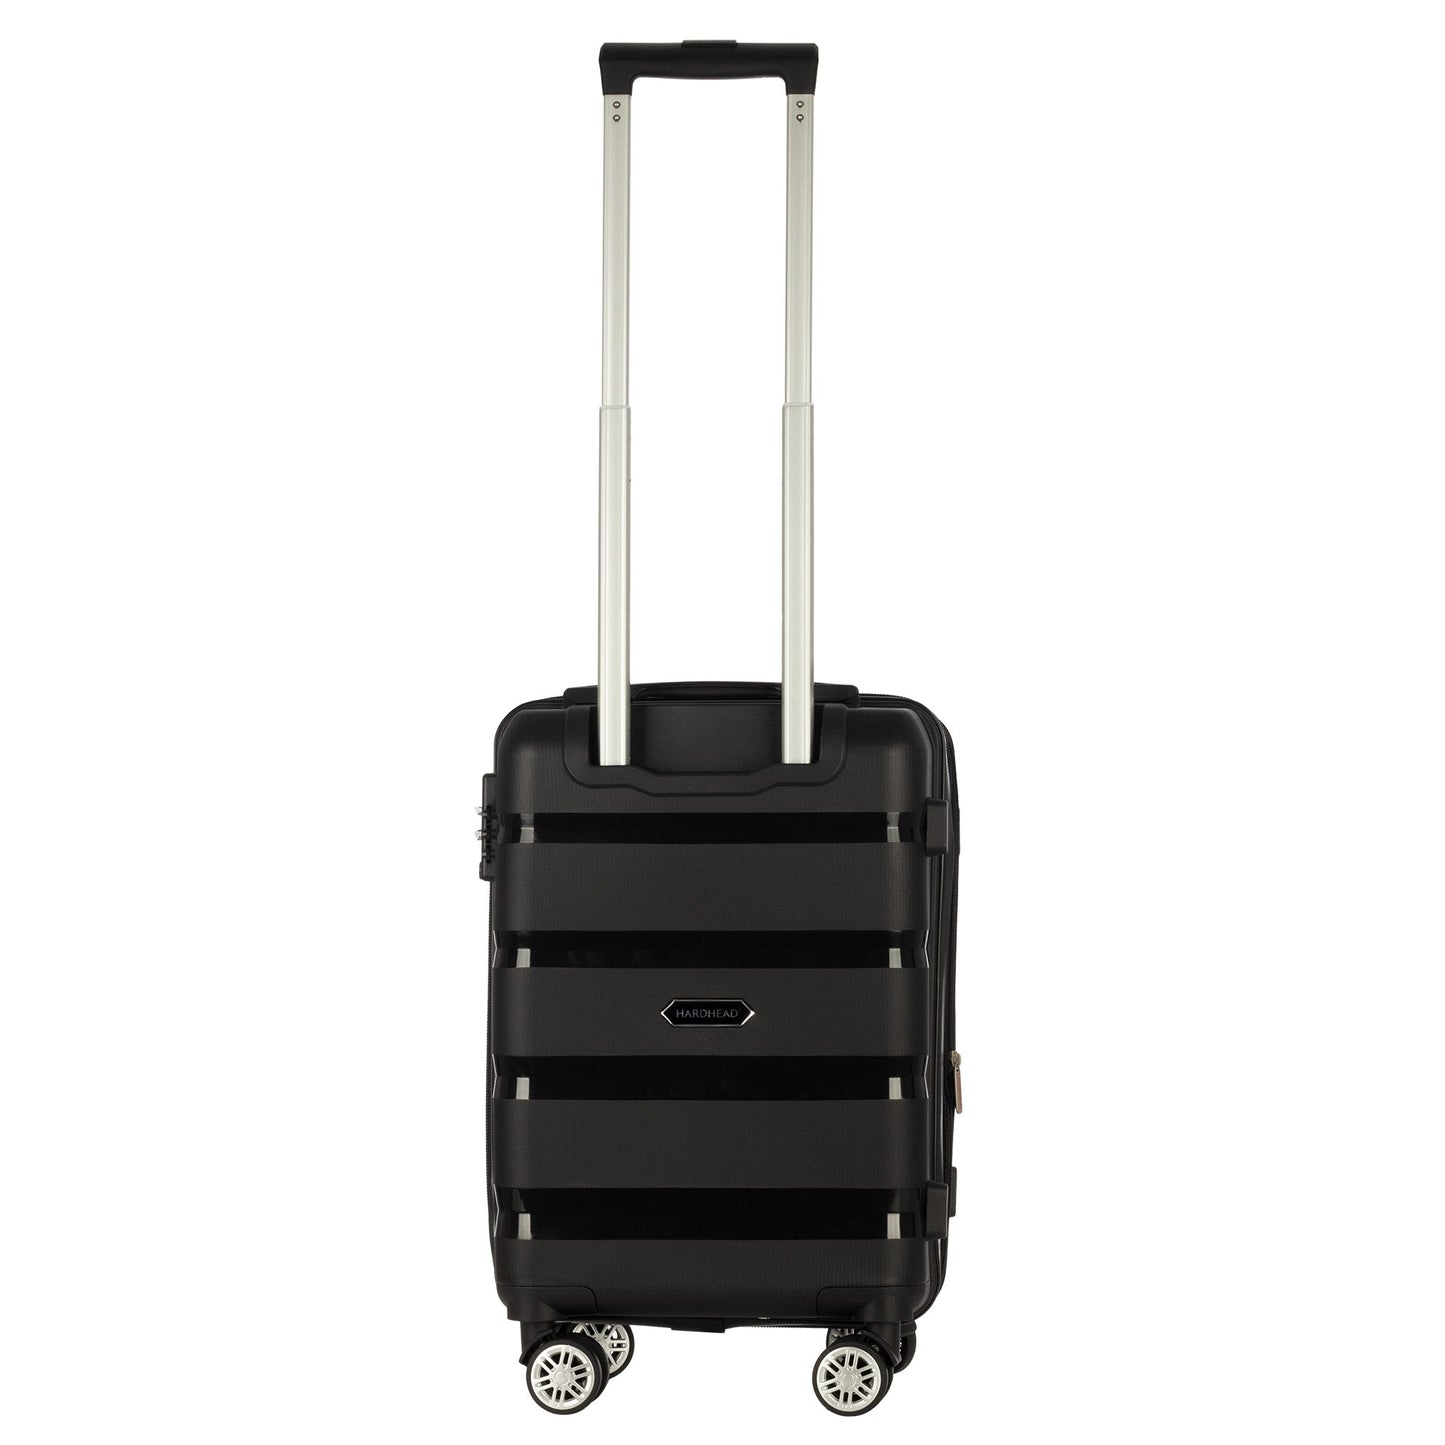 Ian Collection Black luggage (18") Suitcase Lock Spinner Hardshell